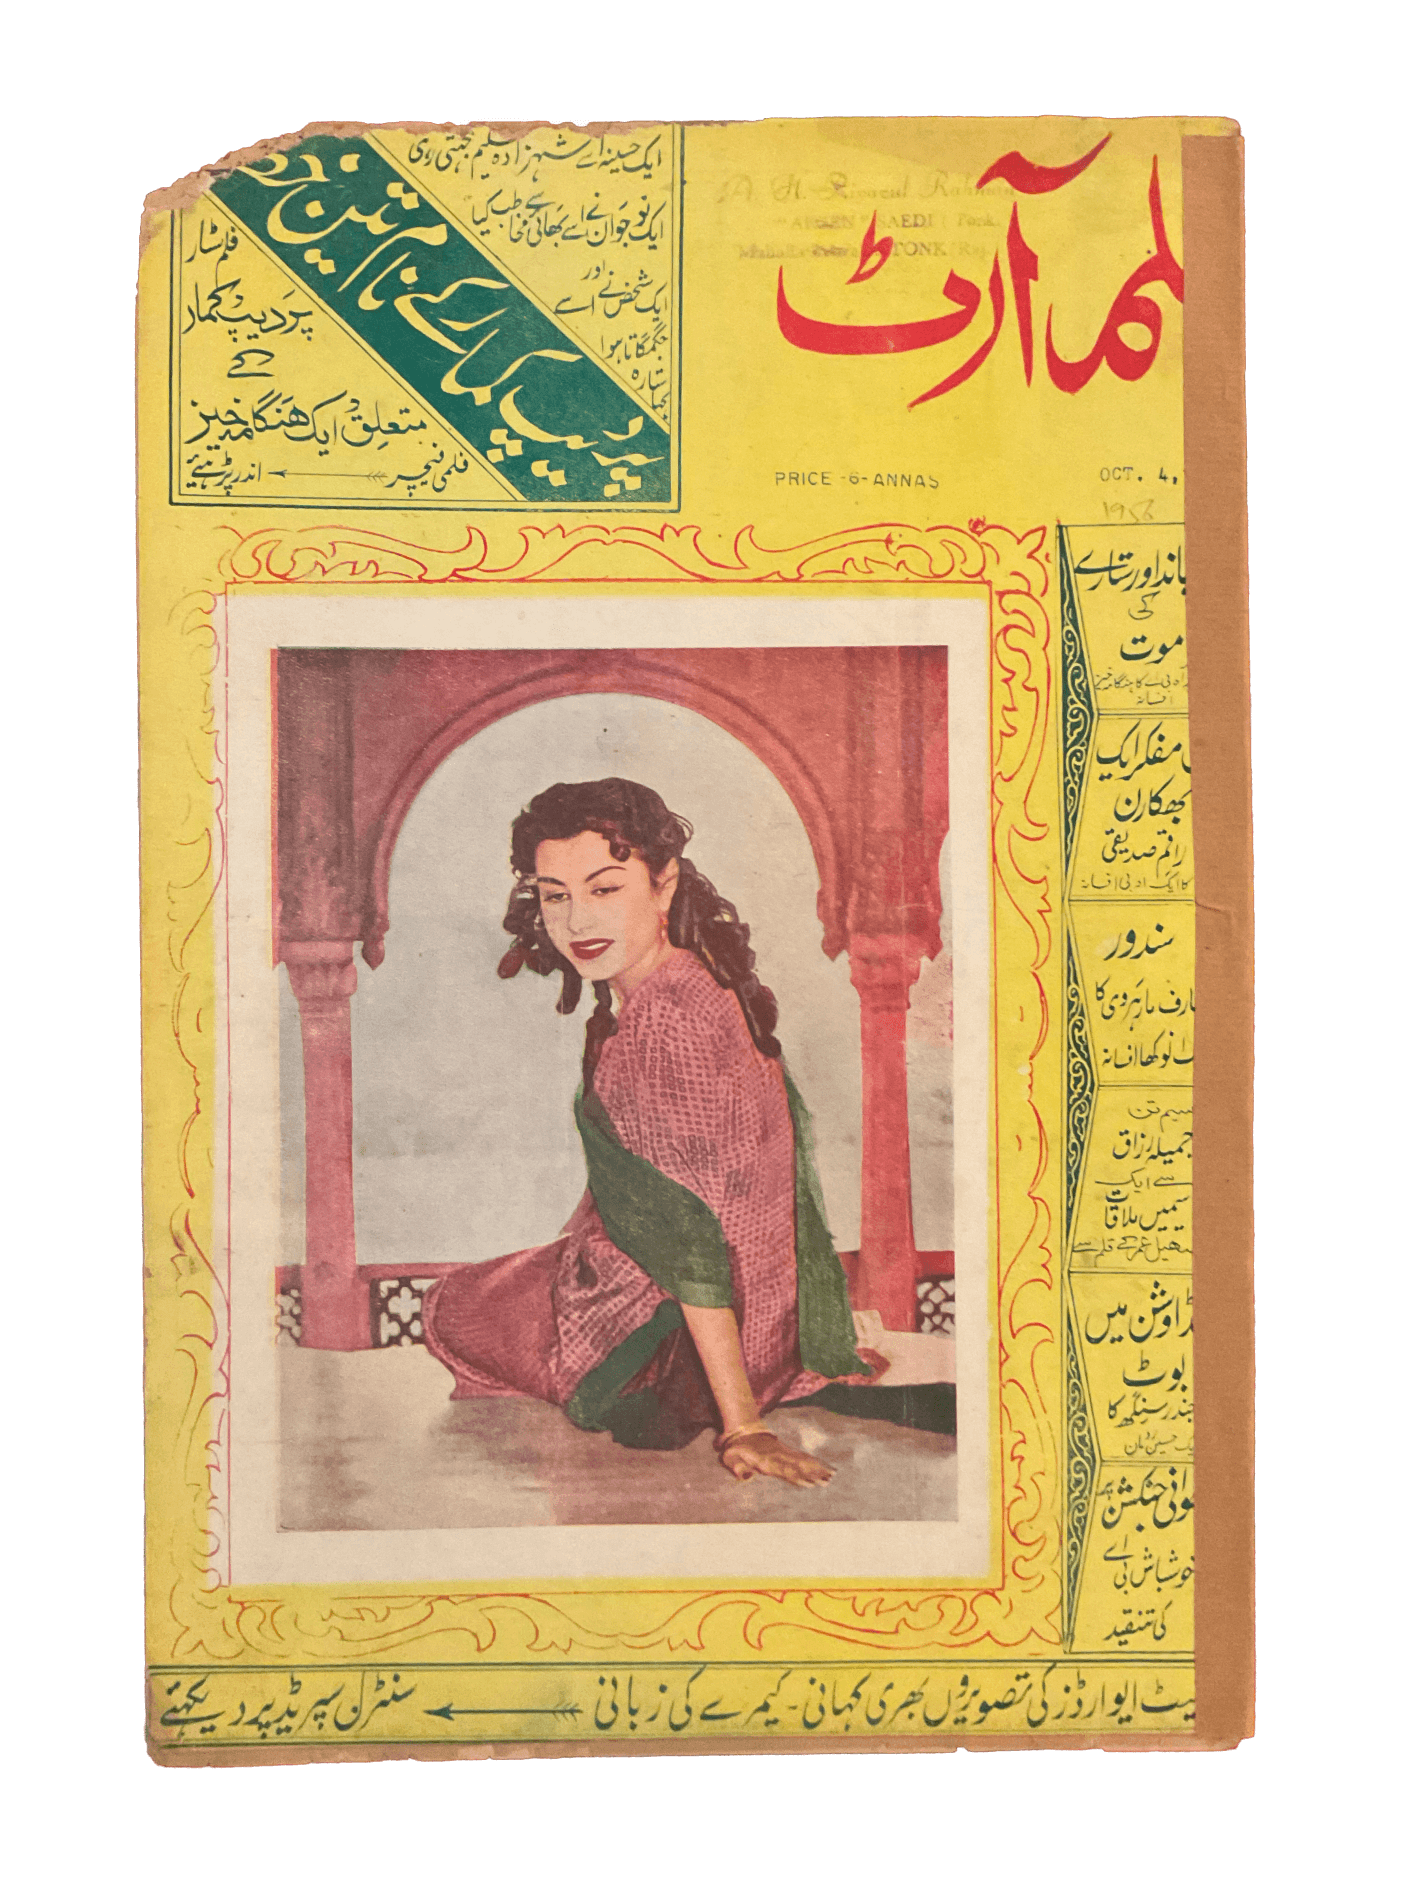 1950s-60s Film Art | 80 Issues - KHAJISTAN™